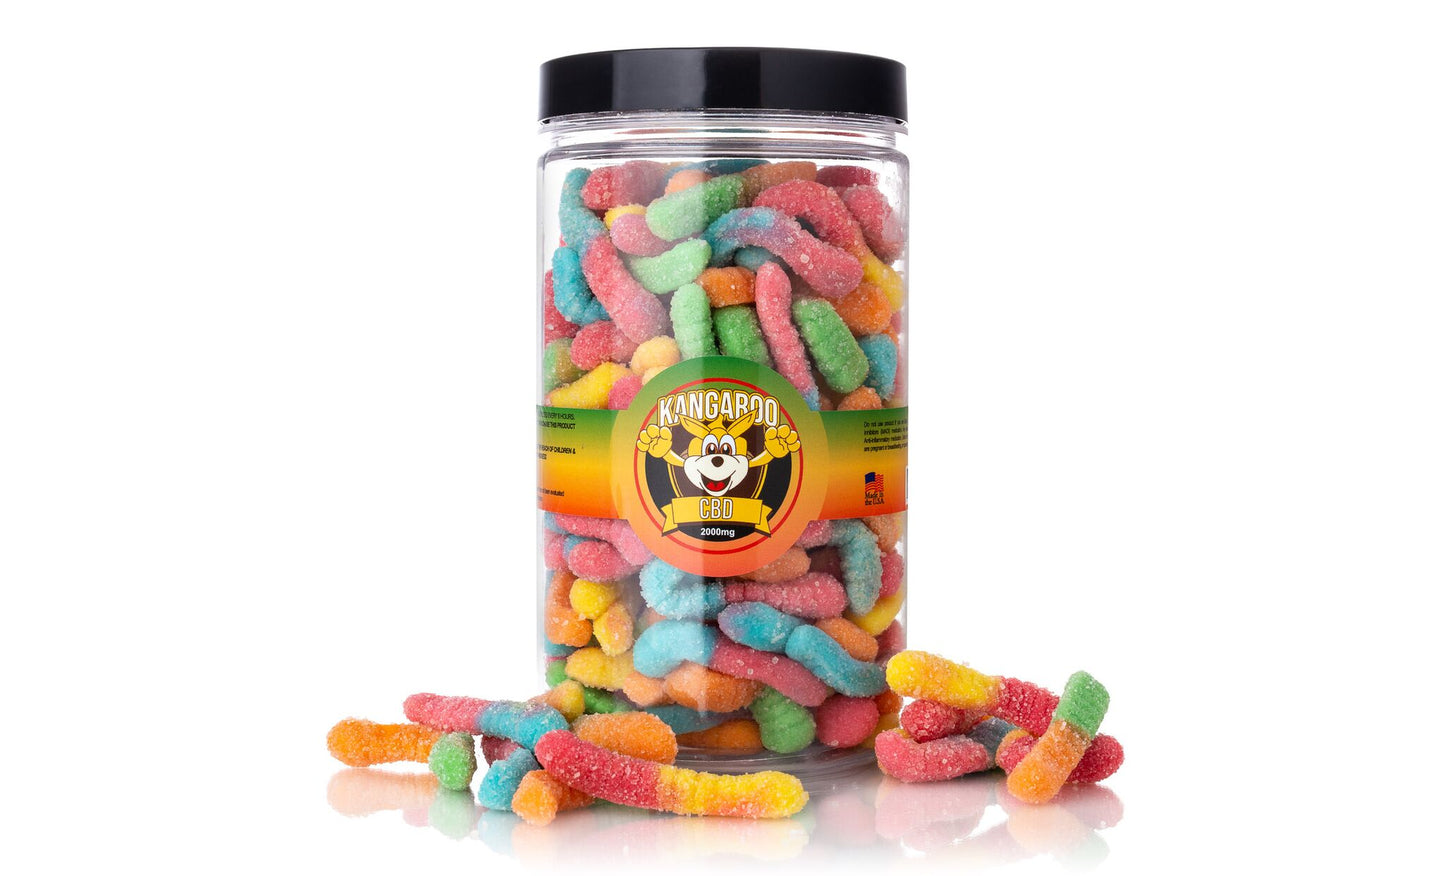 Kangaroo CBD Infused Sour Gummy Worms